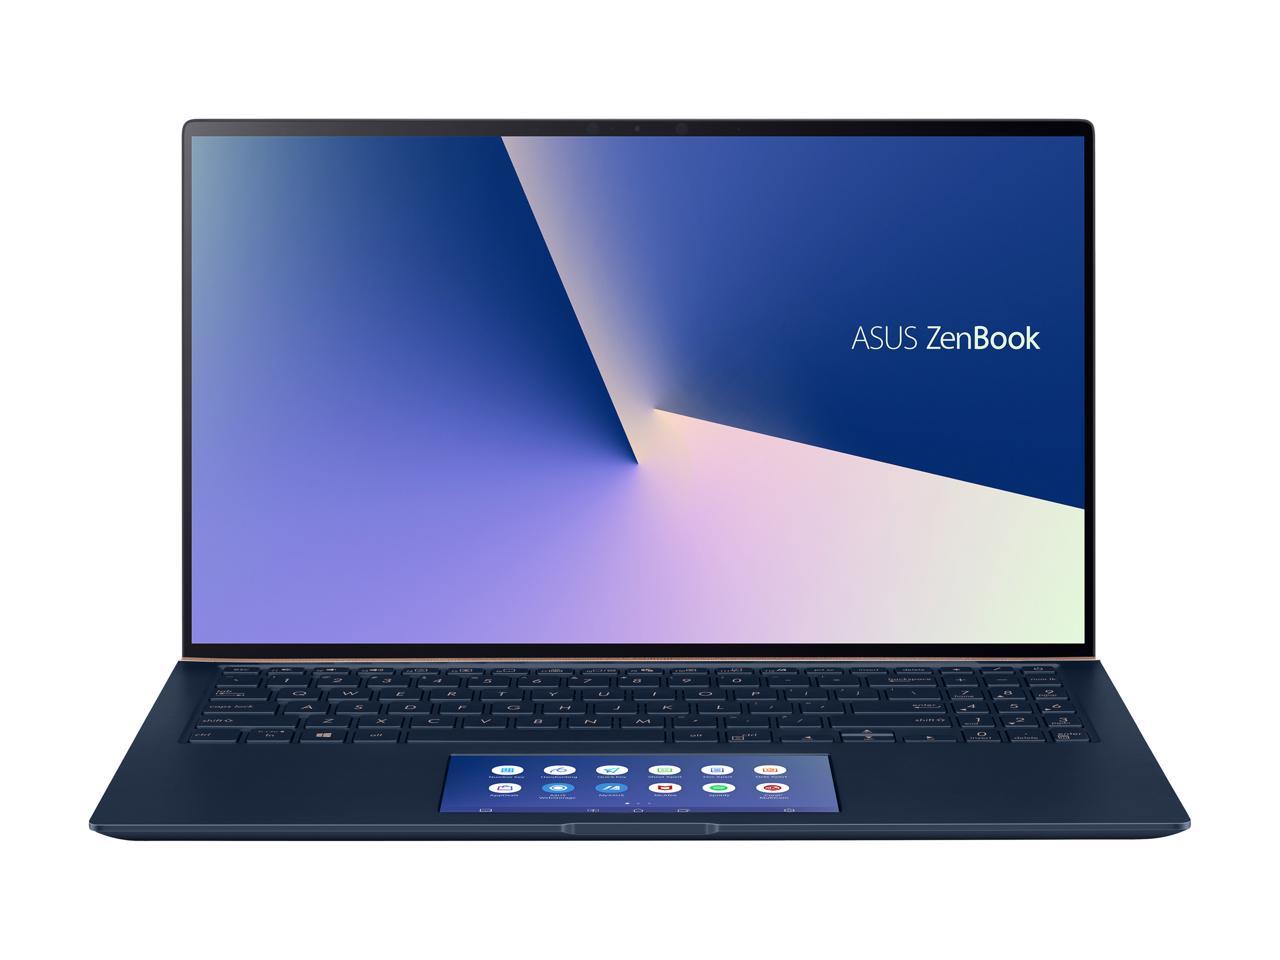 ASUS ZenBook 15 Ultra-Slim Laptop 15.6" 4K UHD NanoEdge Bezel, Intel Core i7-10510U, 16 GB RAM, 1 TB PCIe SSD, GeForce GTX 1650, Innovative ScreenPad 2.0, Windows 10 Pro, UX534FTC-NH76, Royal Blue